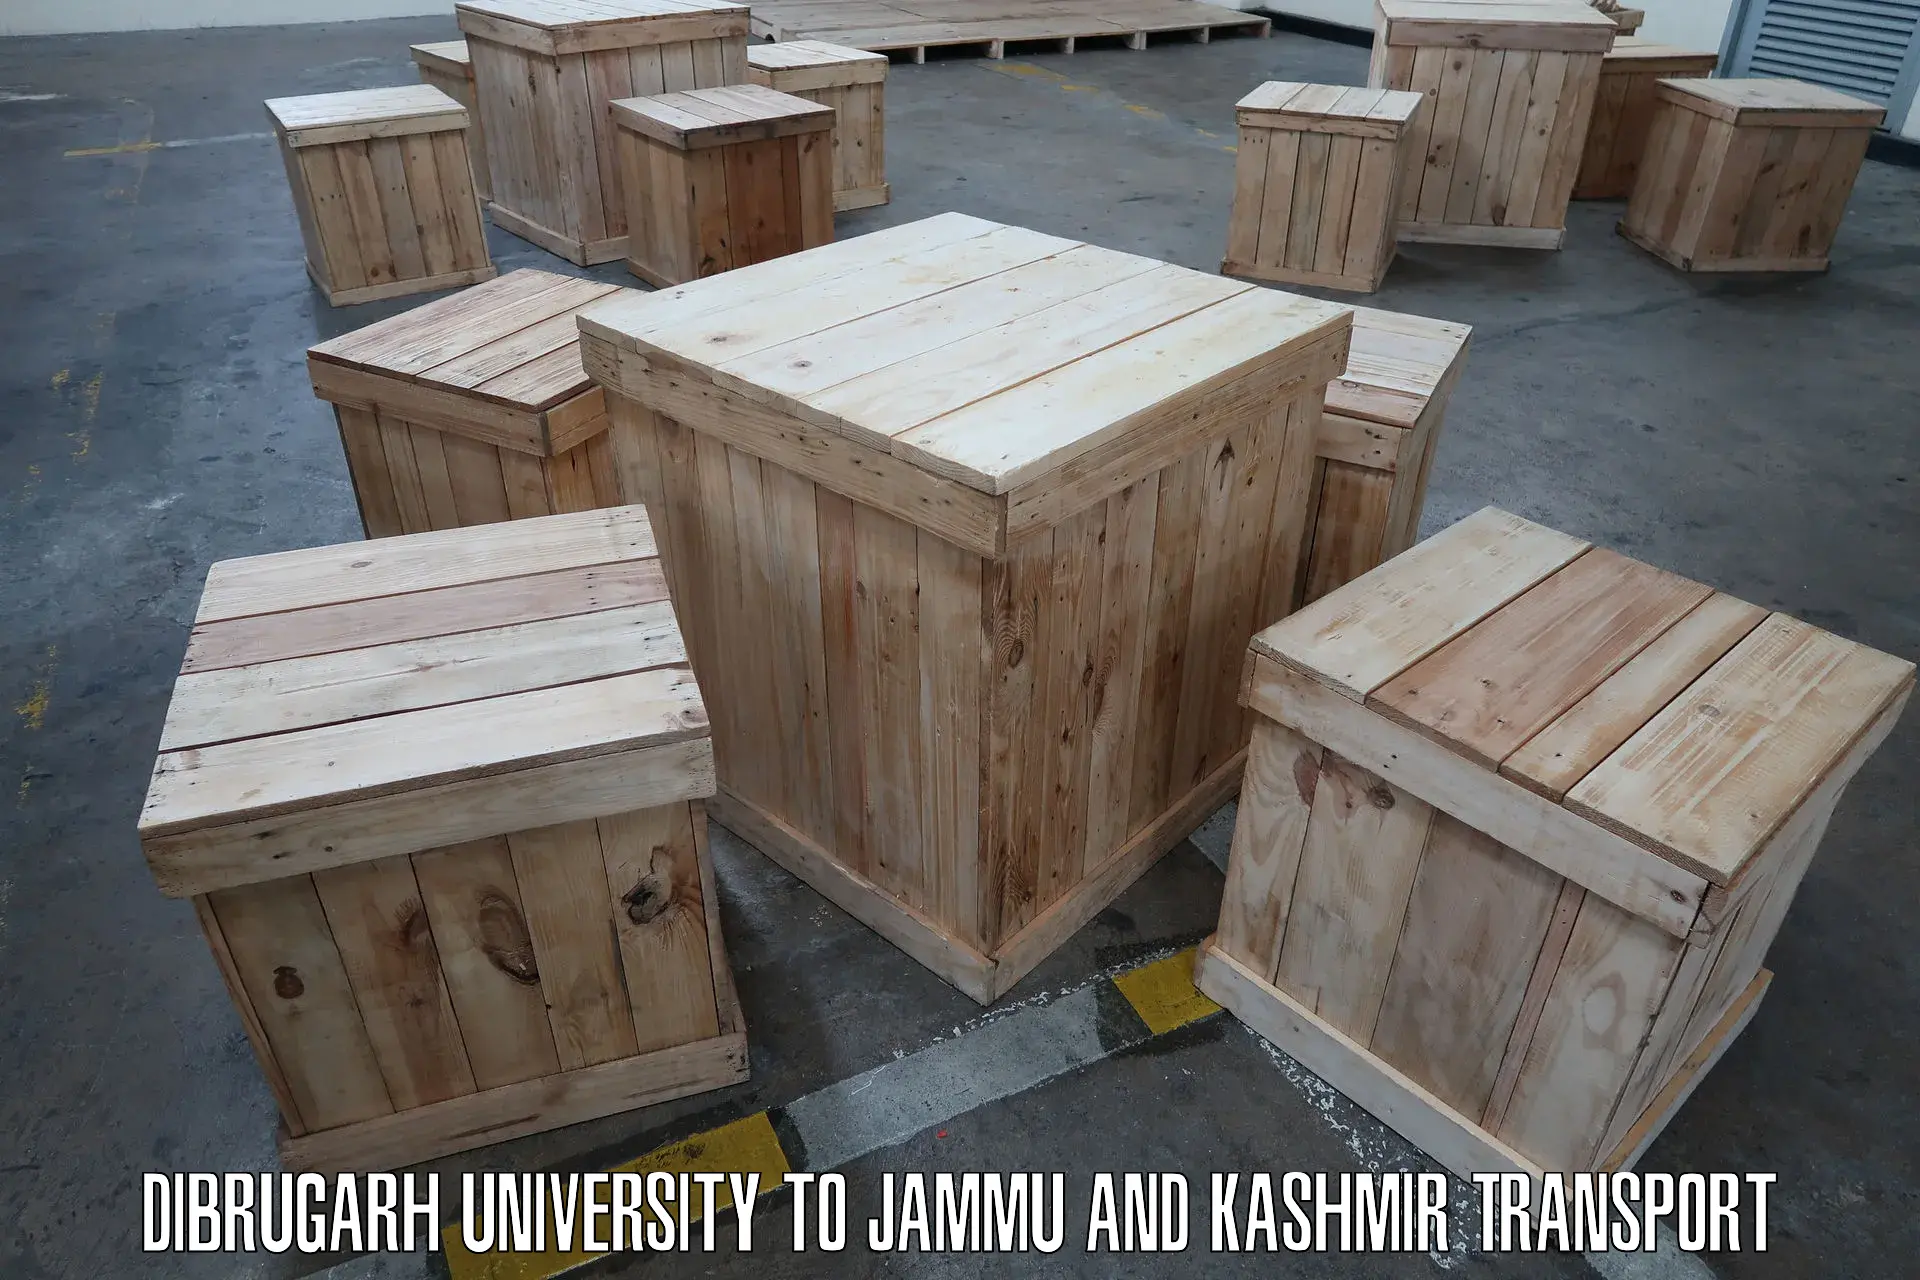 Transport in sharing in Dibrugarh University to University of Jammu